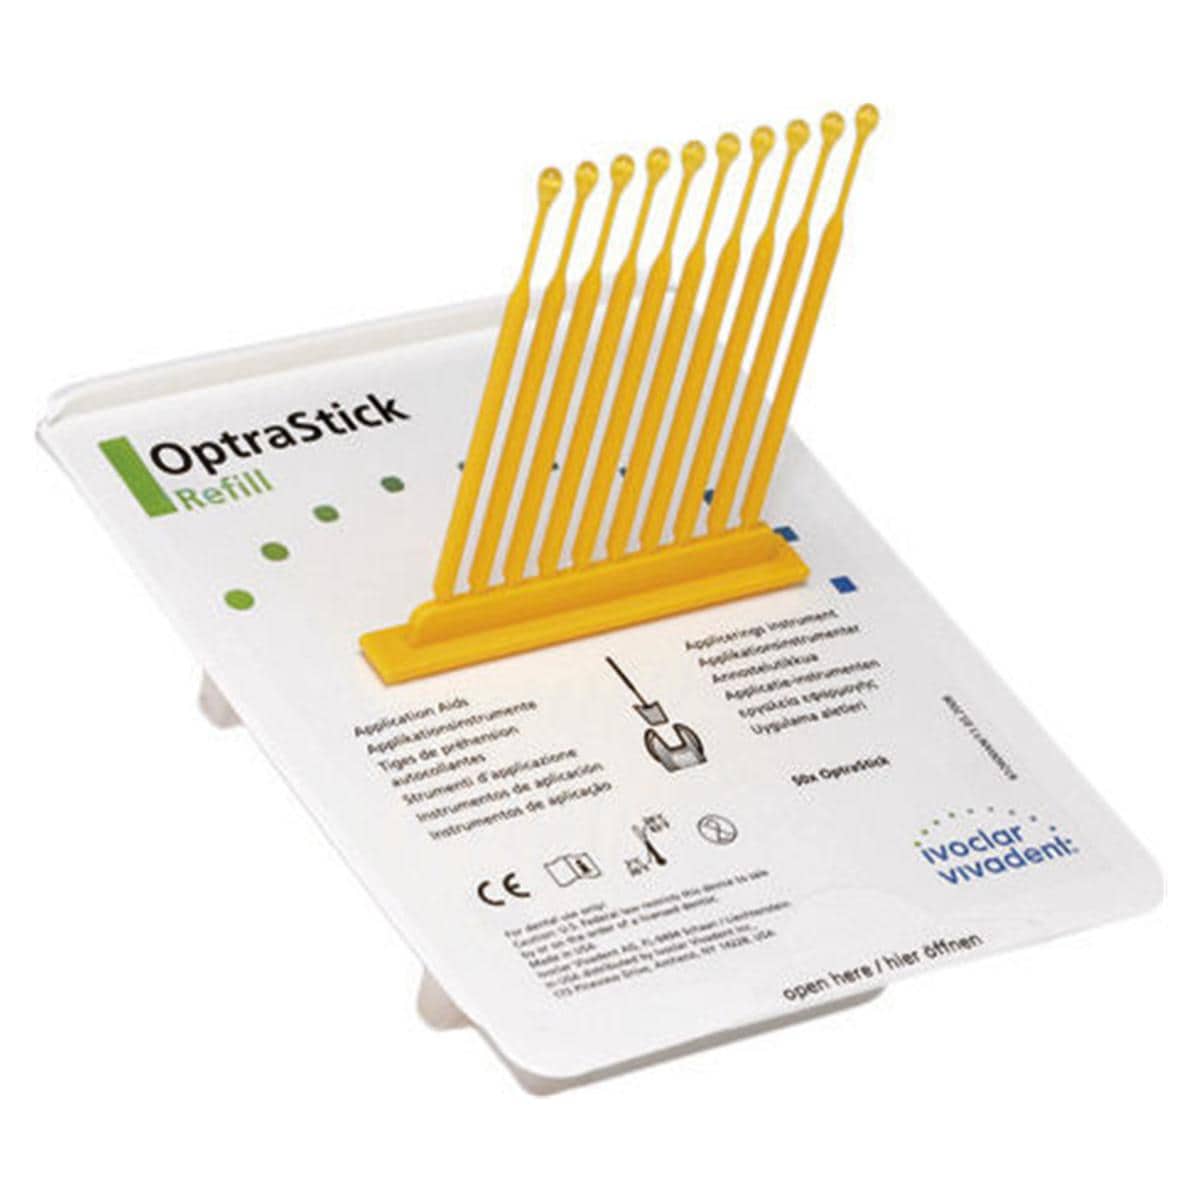 OptraStick - Emballage, 48 pcs